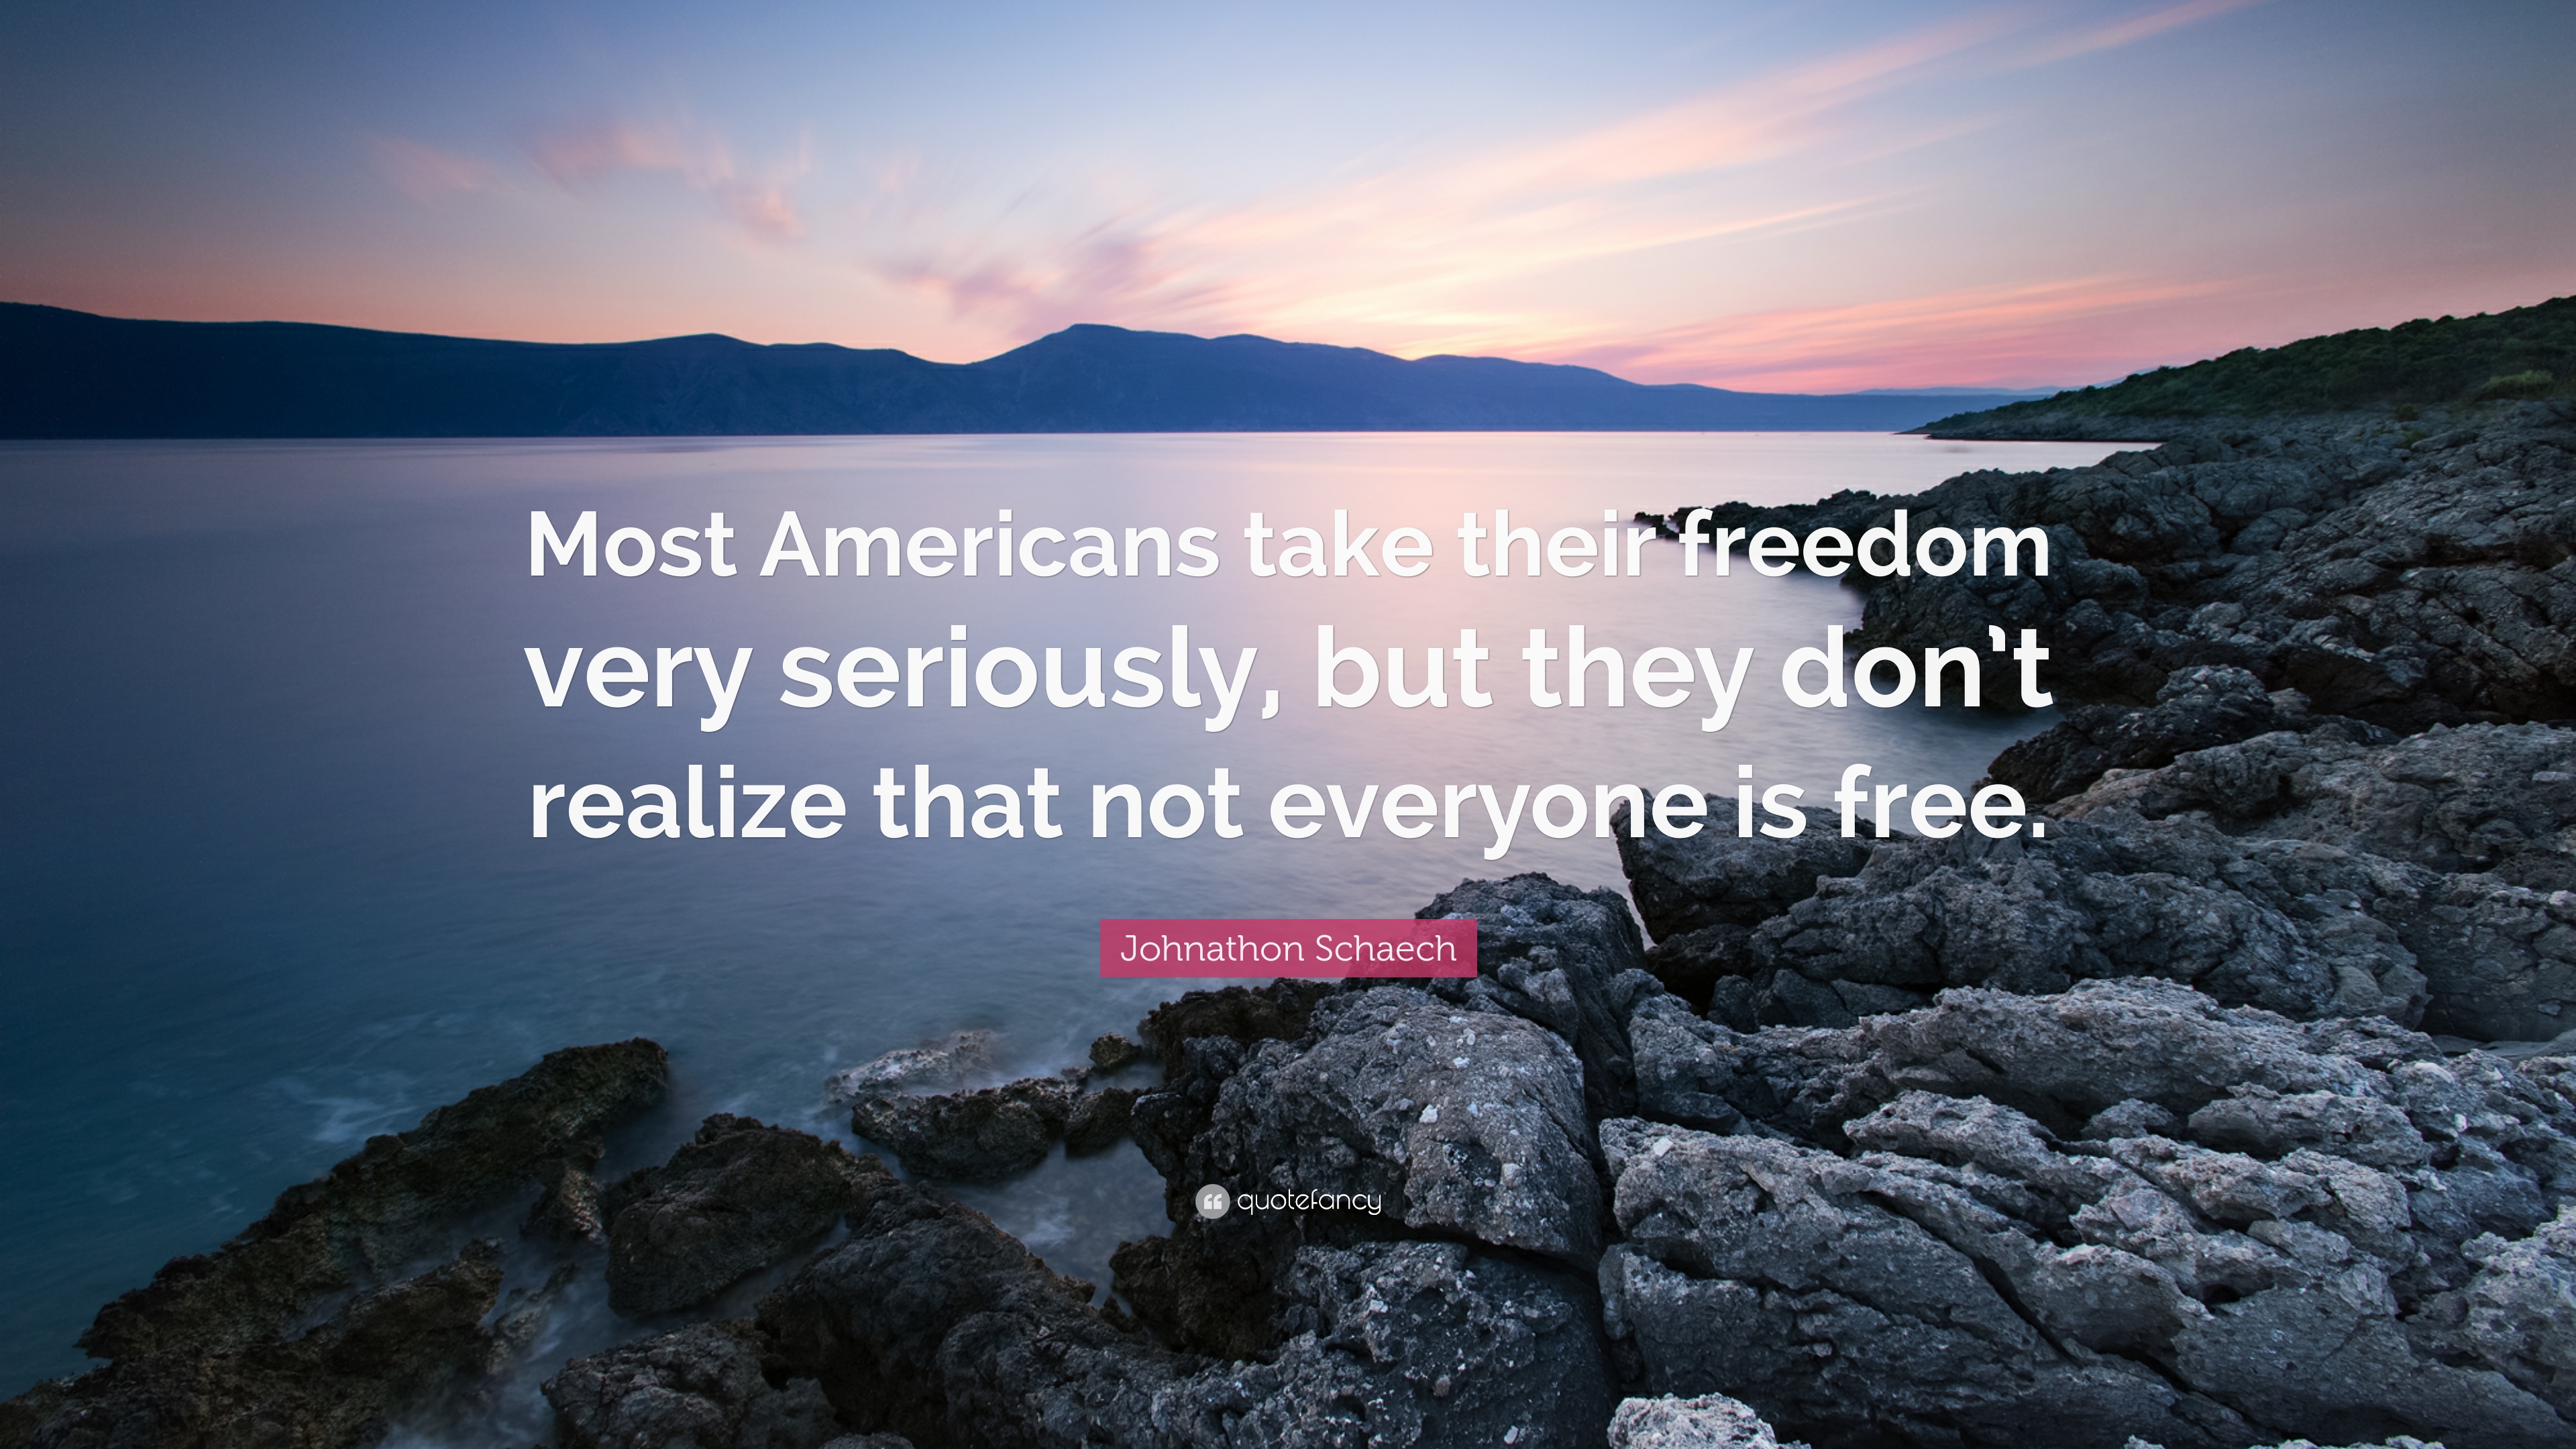 Johnathon Schaech Quote: “Most Americans take their freedom